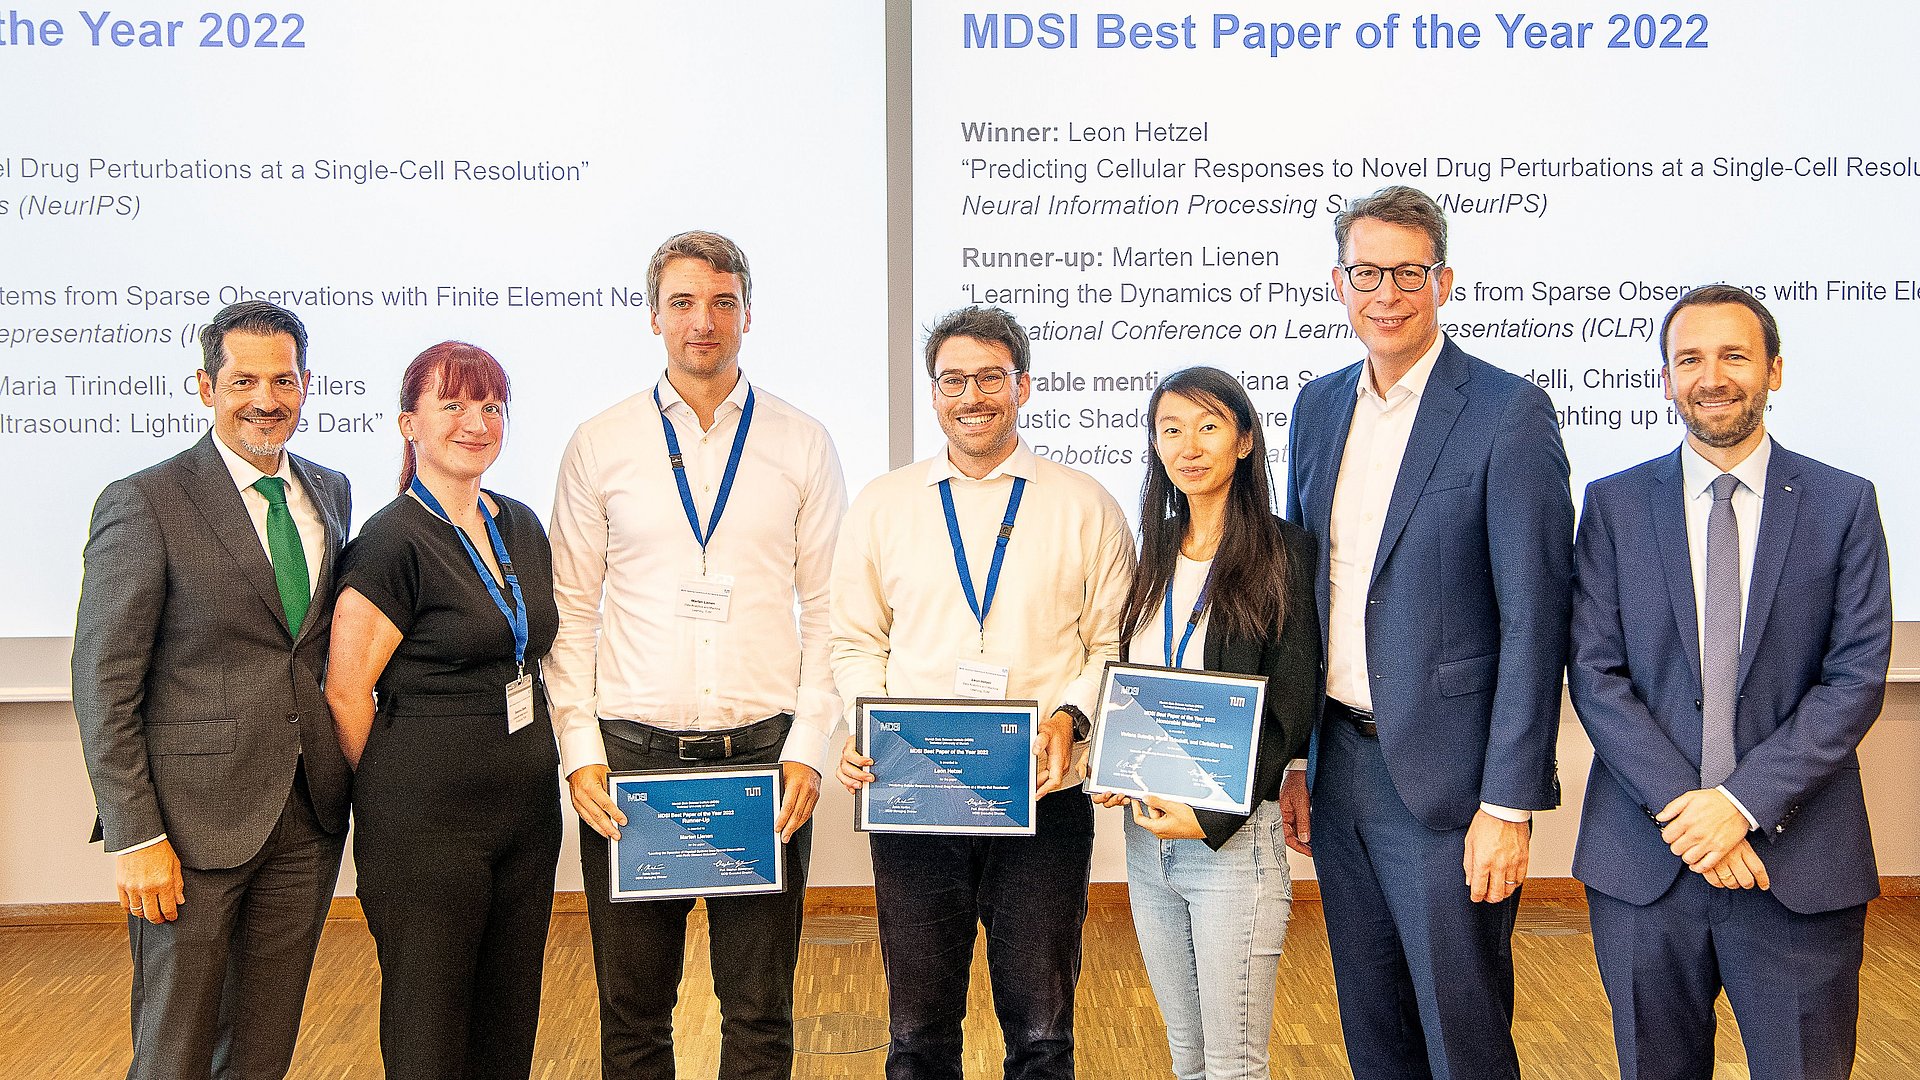 Presentation of the MDSI Best Paper Award